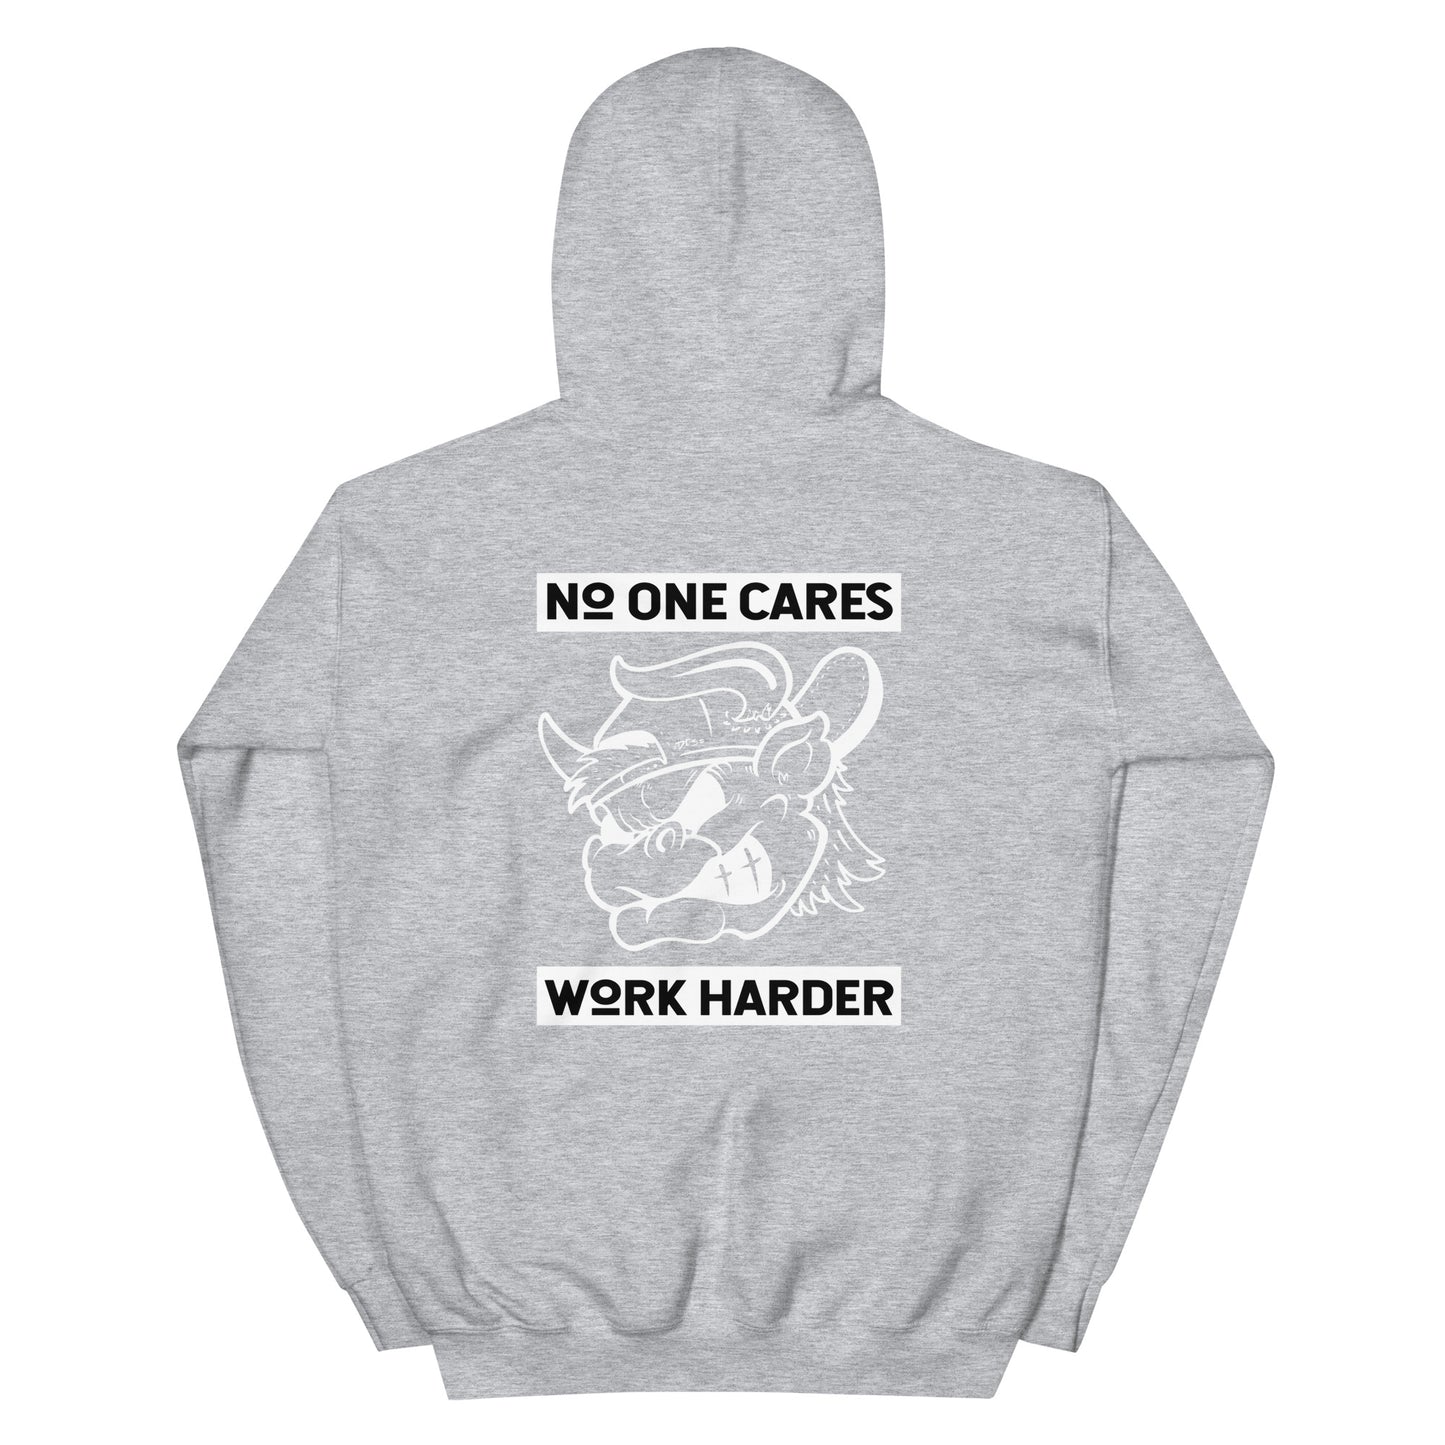 No one cares work harder hoodie